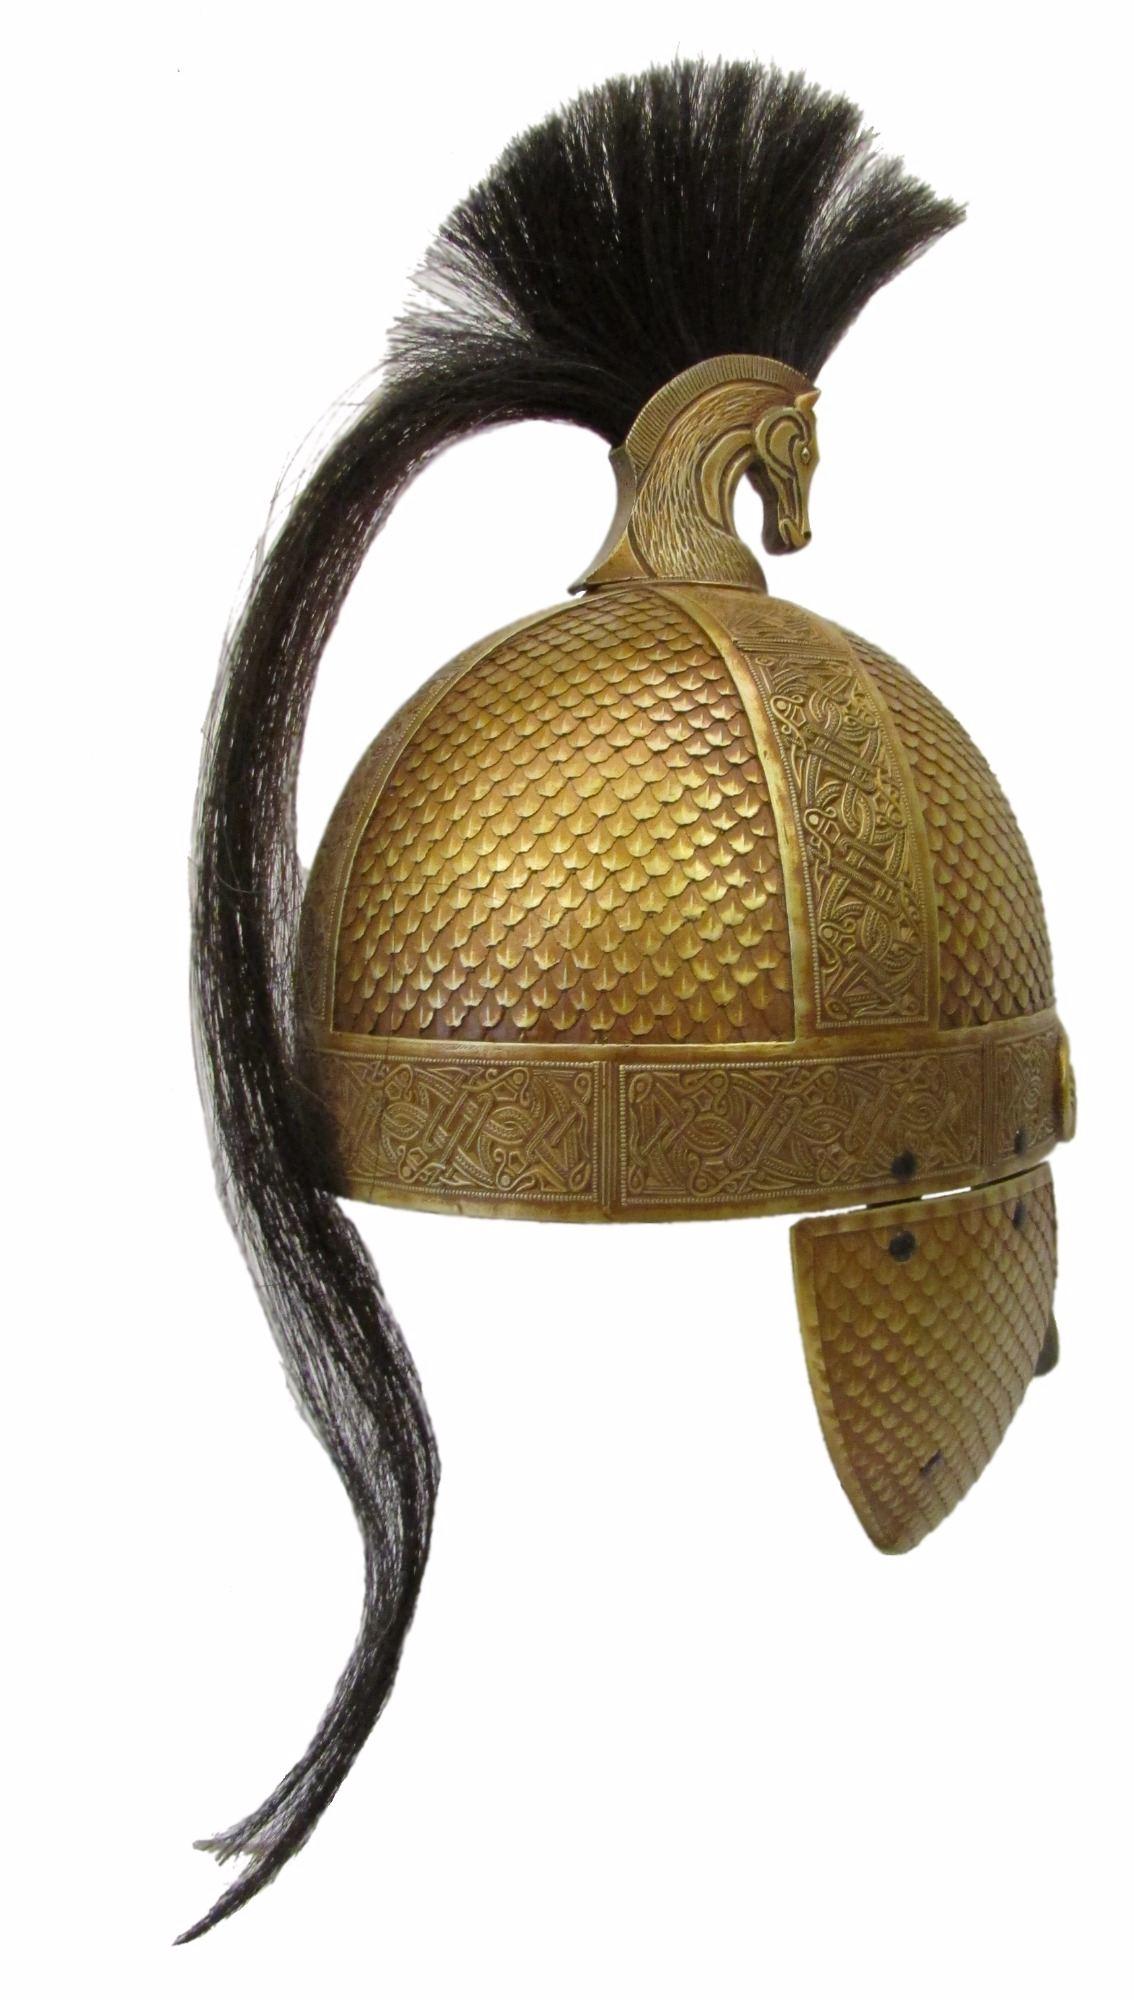 Wyrmwick celtic scaled larp helmet